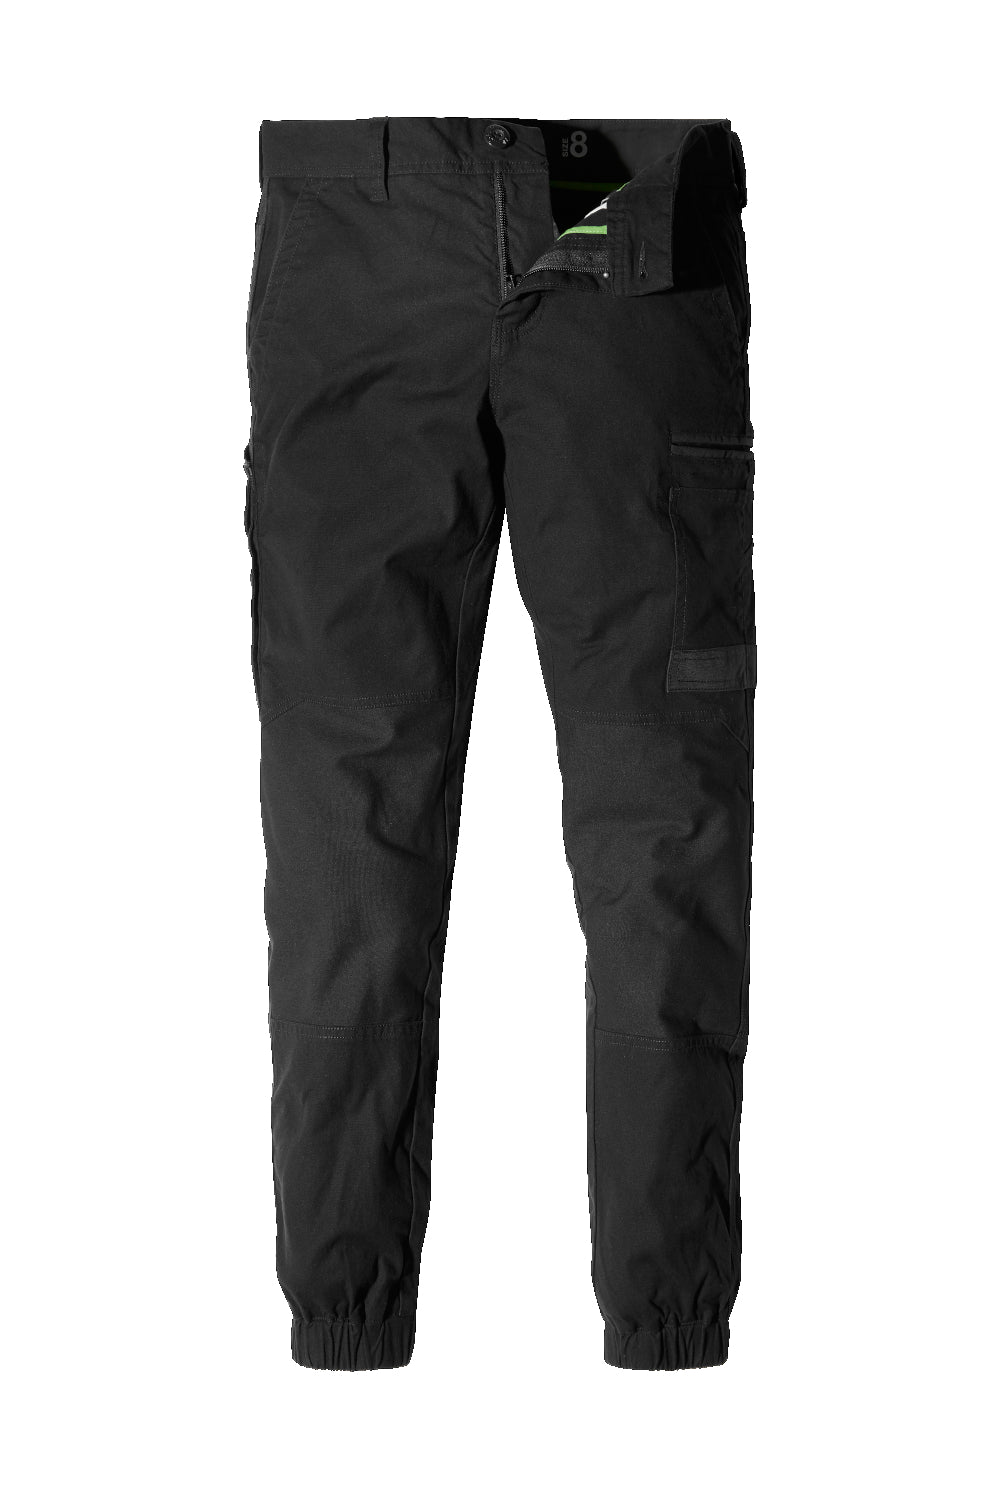 Crawford Pant, Black - Pharsol Protect - Workwear